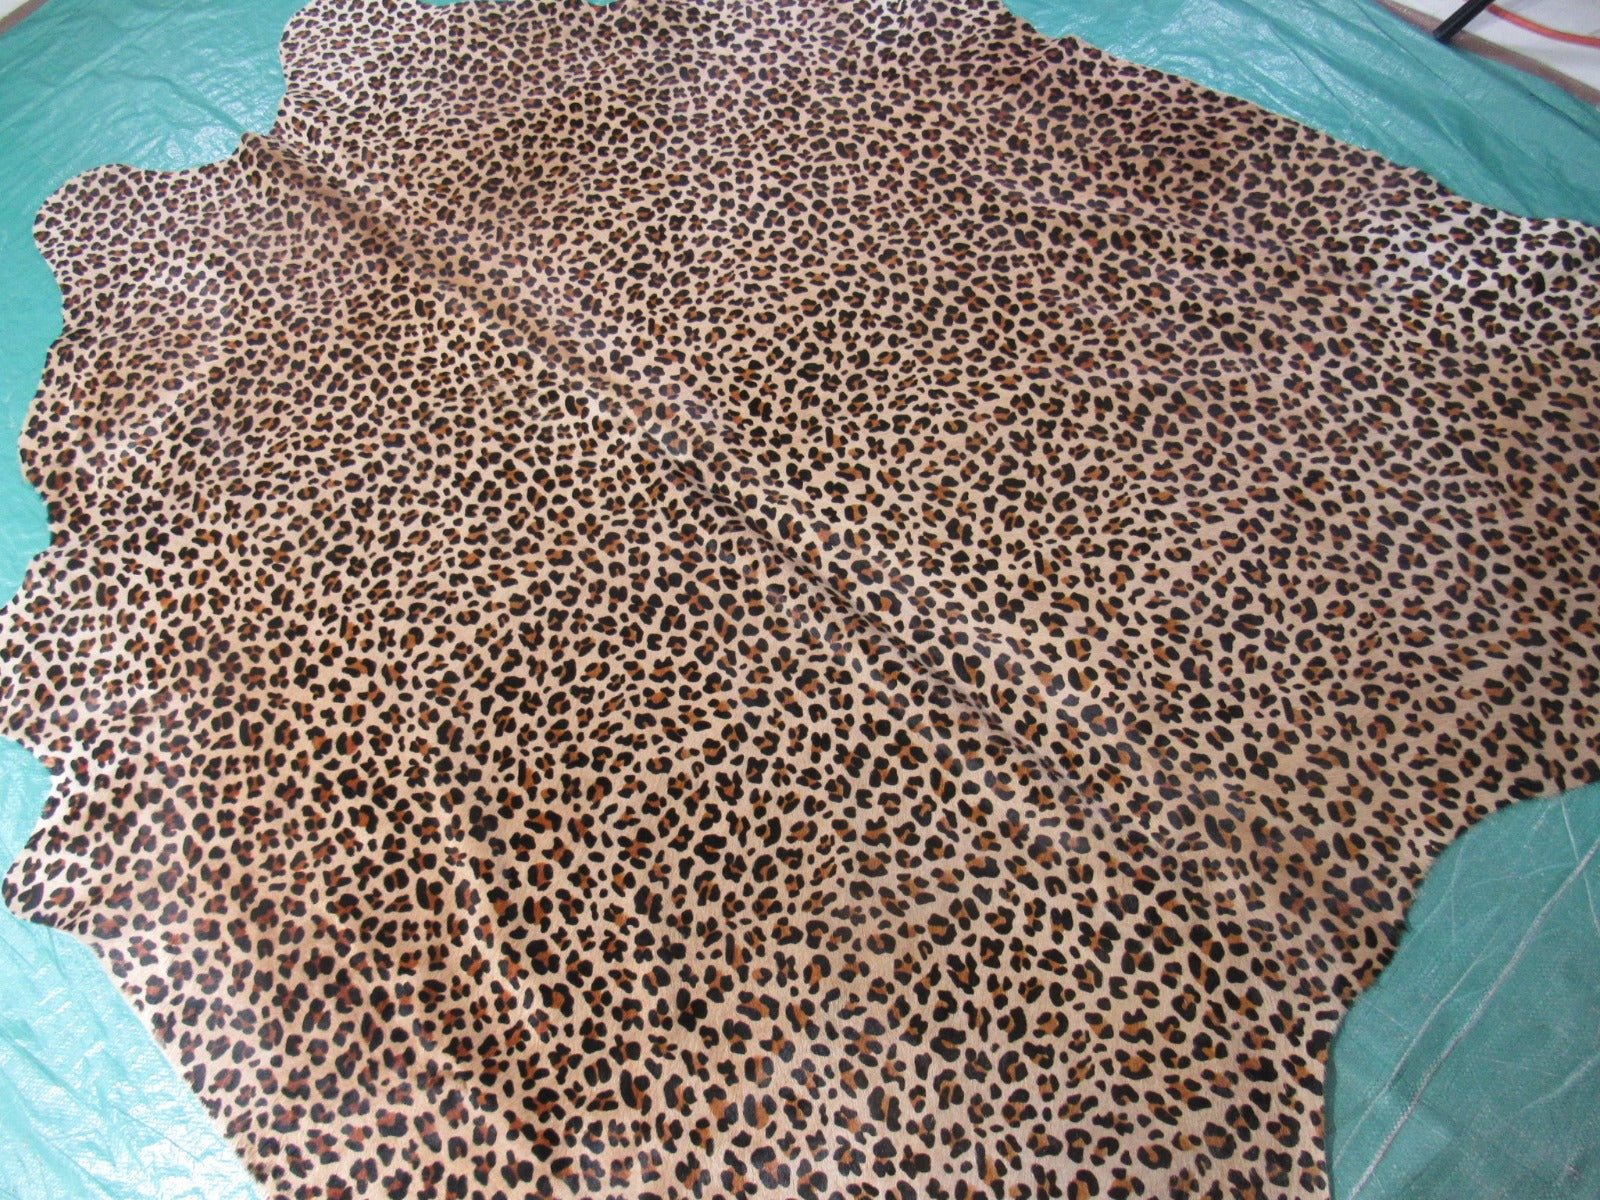 Leopard Print Cowhide Rug Size: 6.5x6.2 feet C-1647